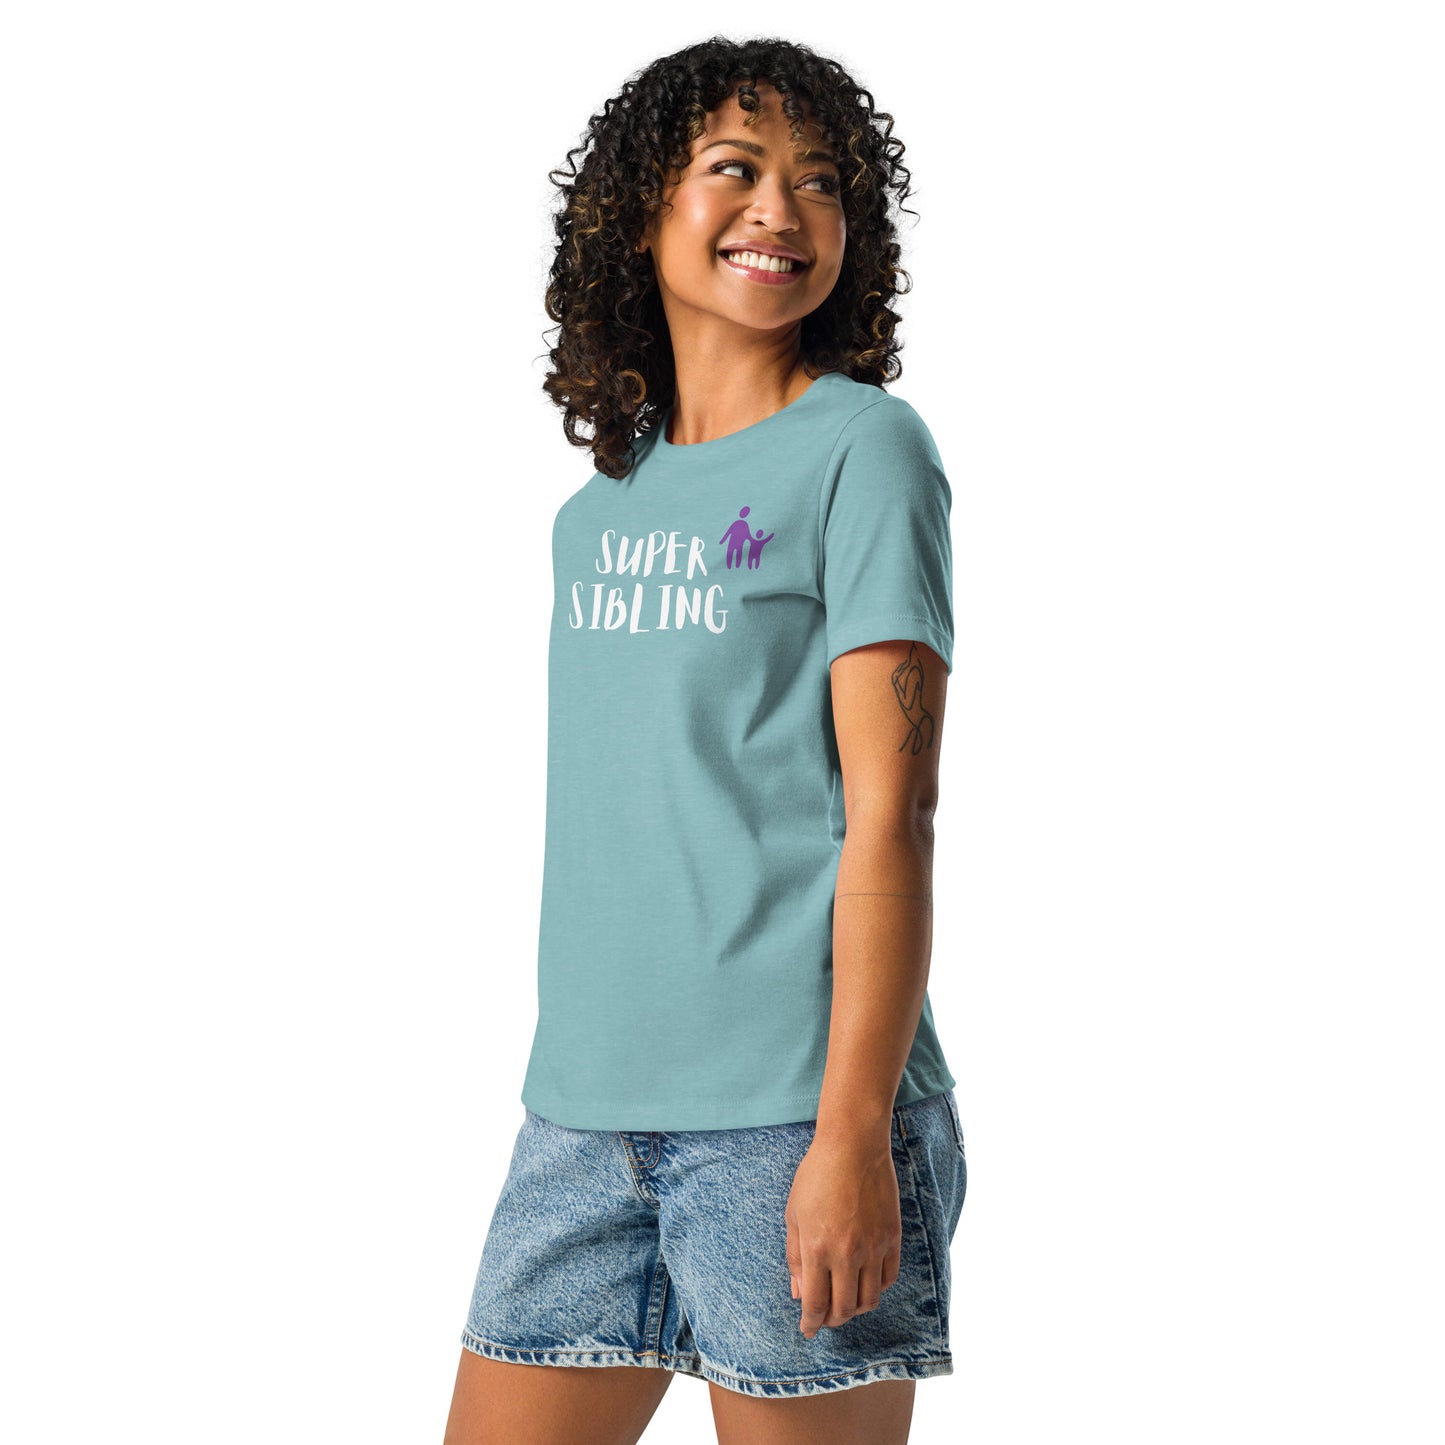 Super Sibling Women's Relaxed T-Shirt